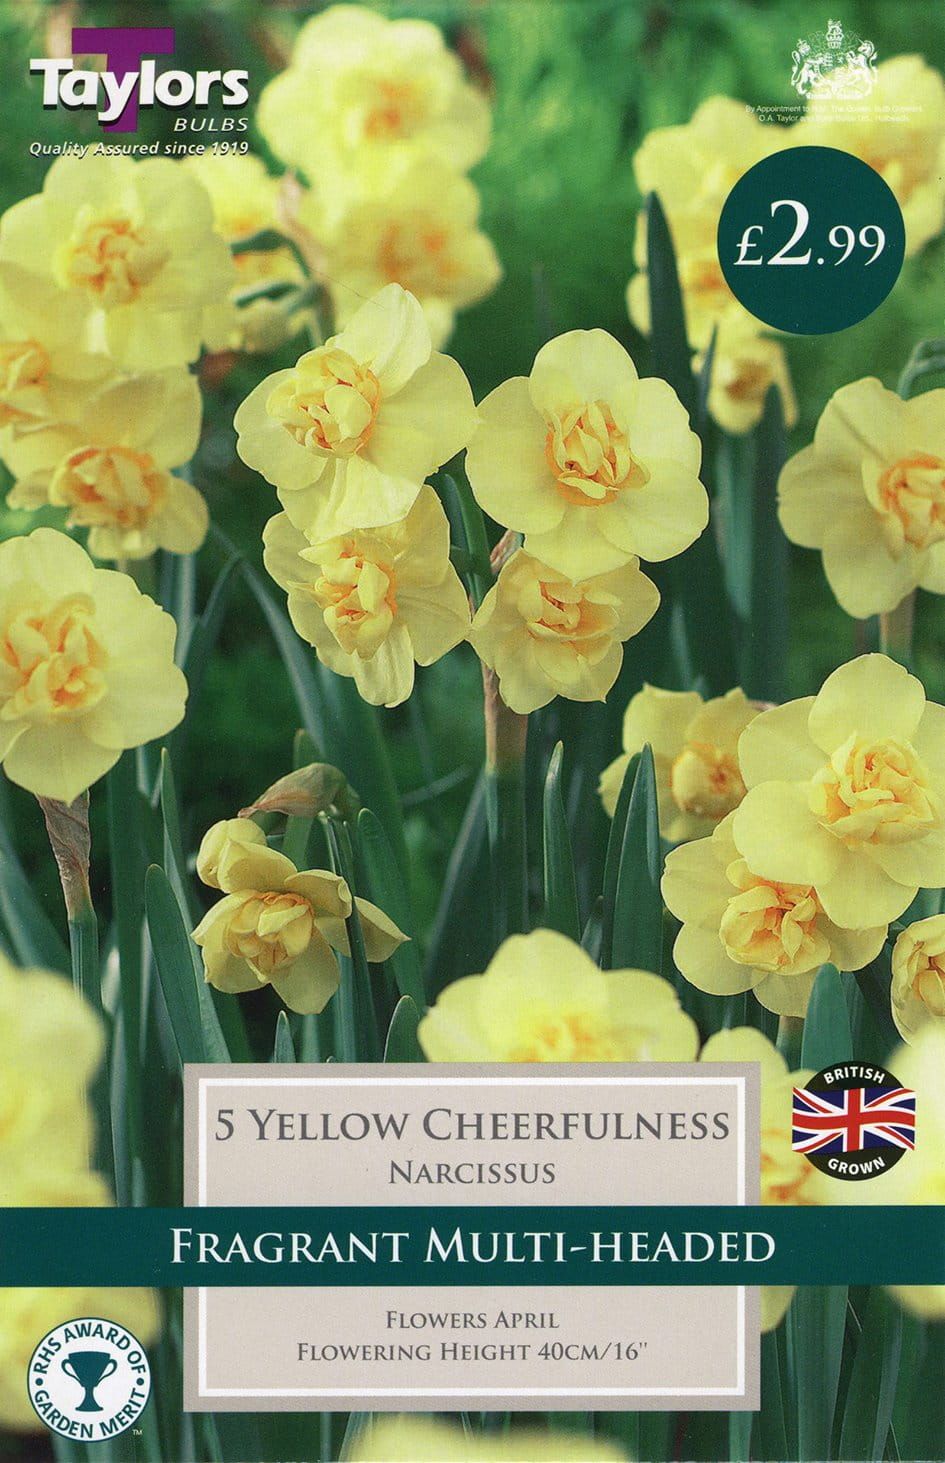 Taylors Daffodil - Narcissus Cheerfulness Yellow - 5 Bulbs